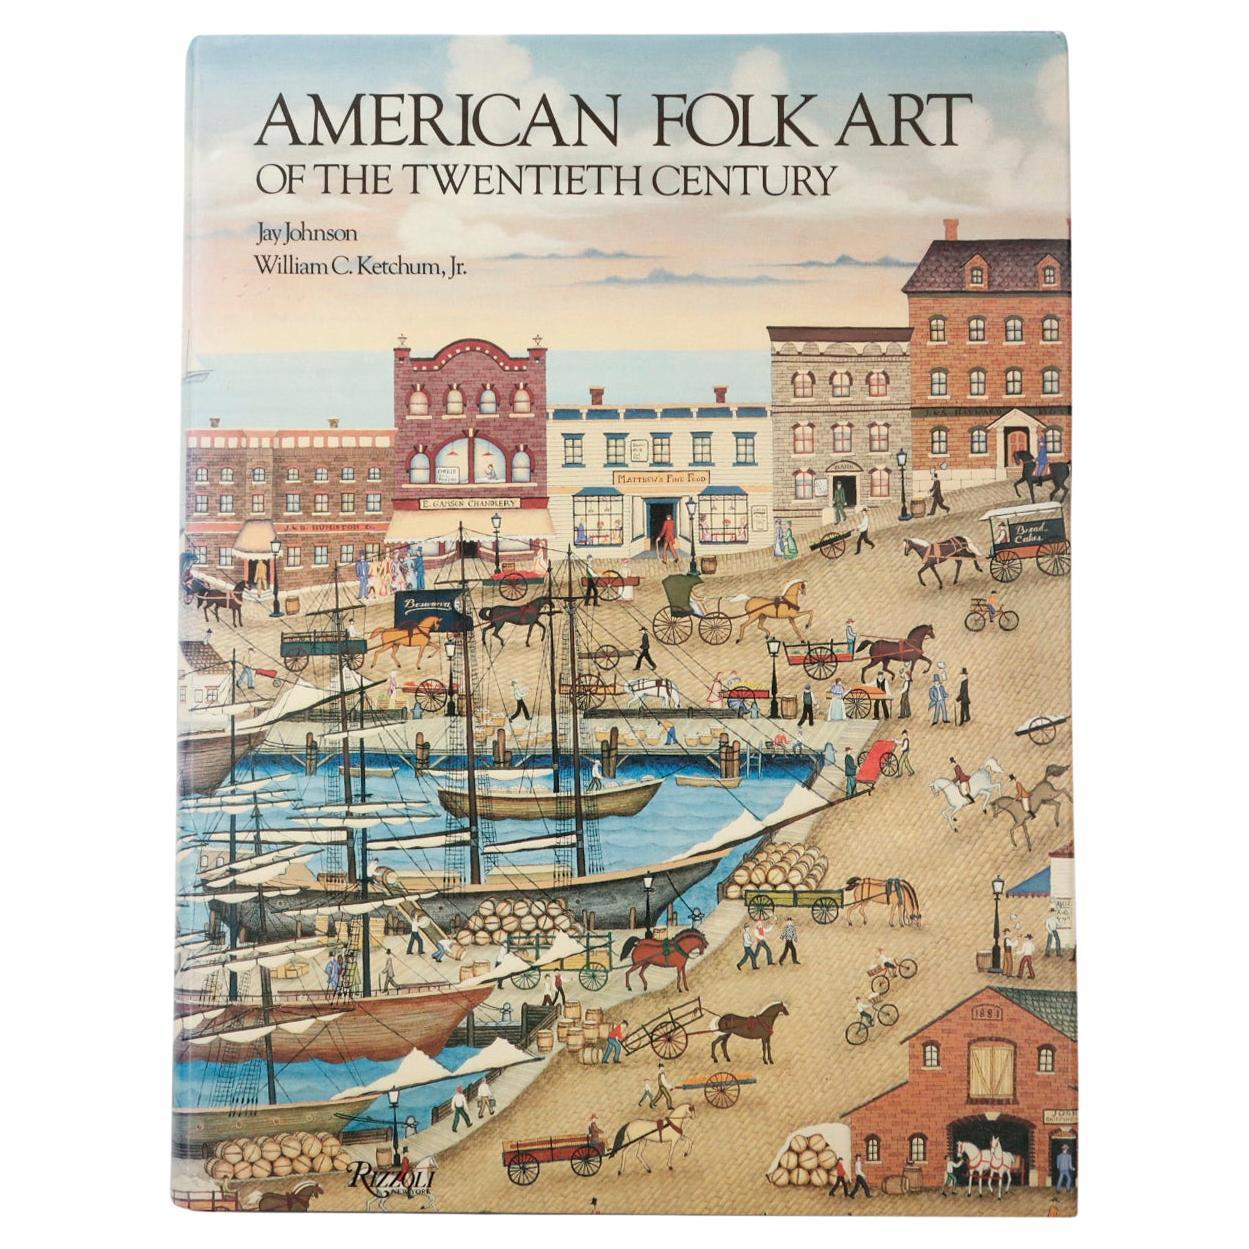 American Folk Art of the Twentieth Century